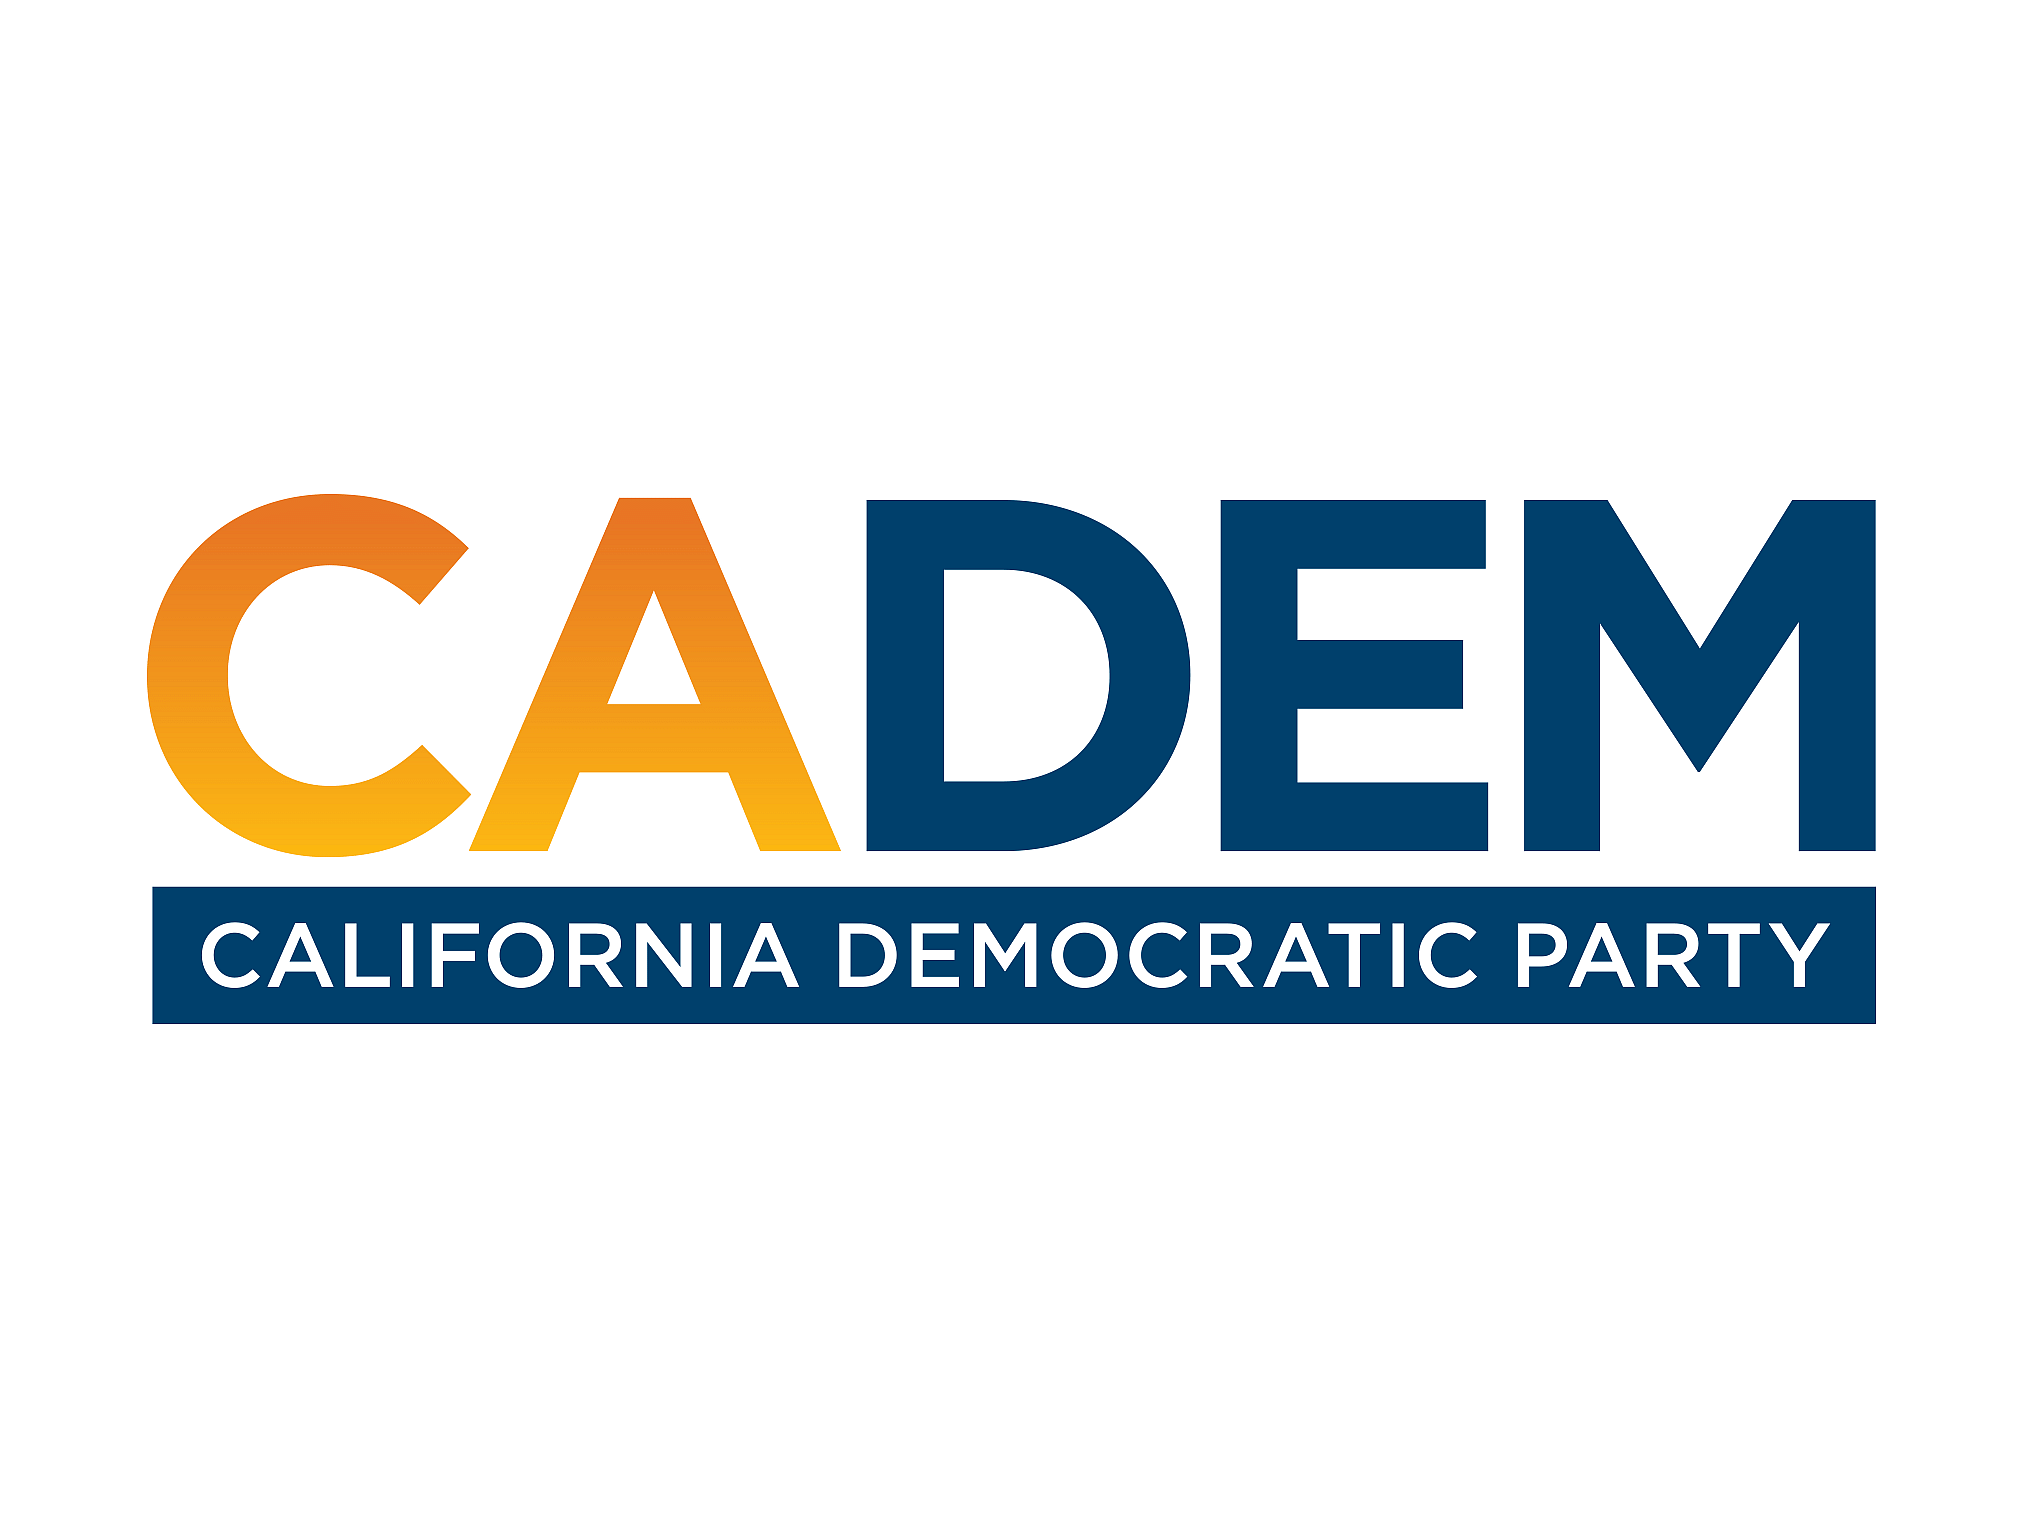 California Democratic Party logo